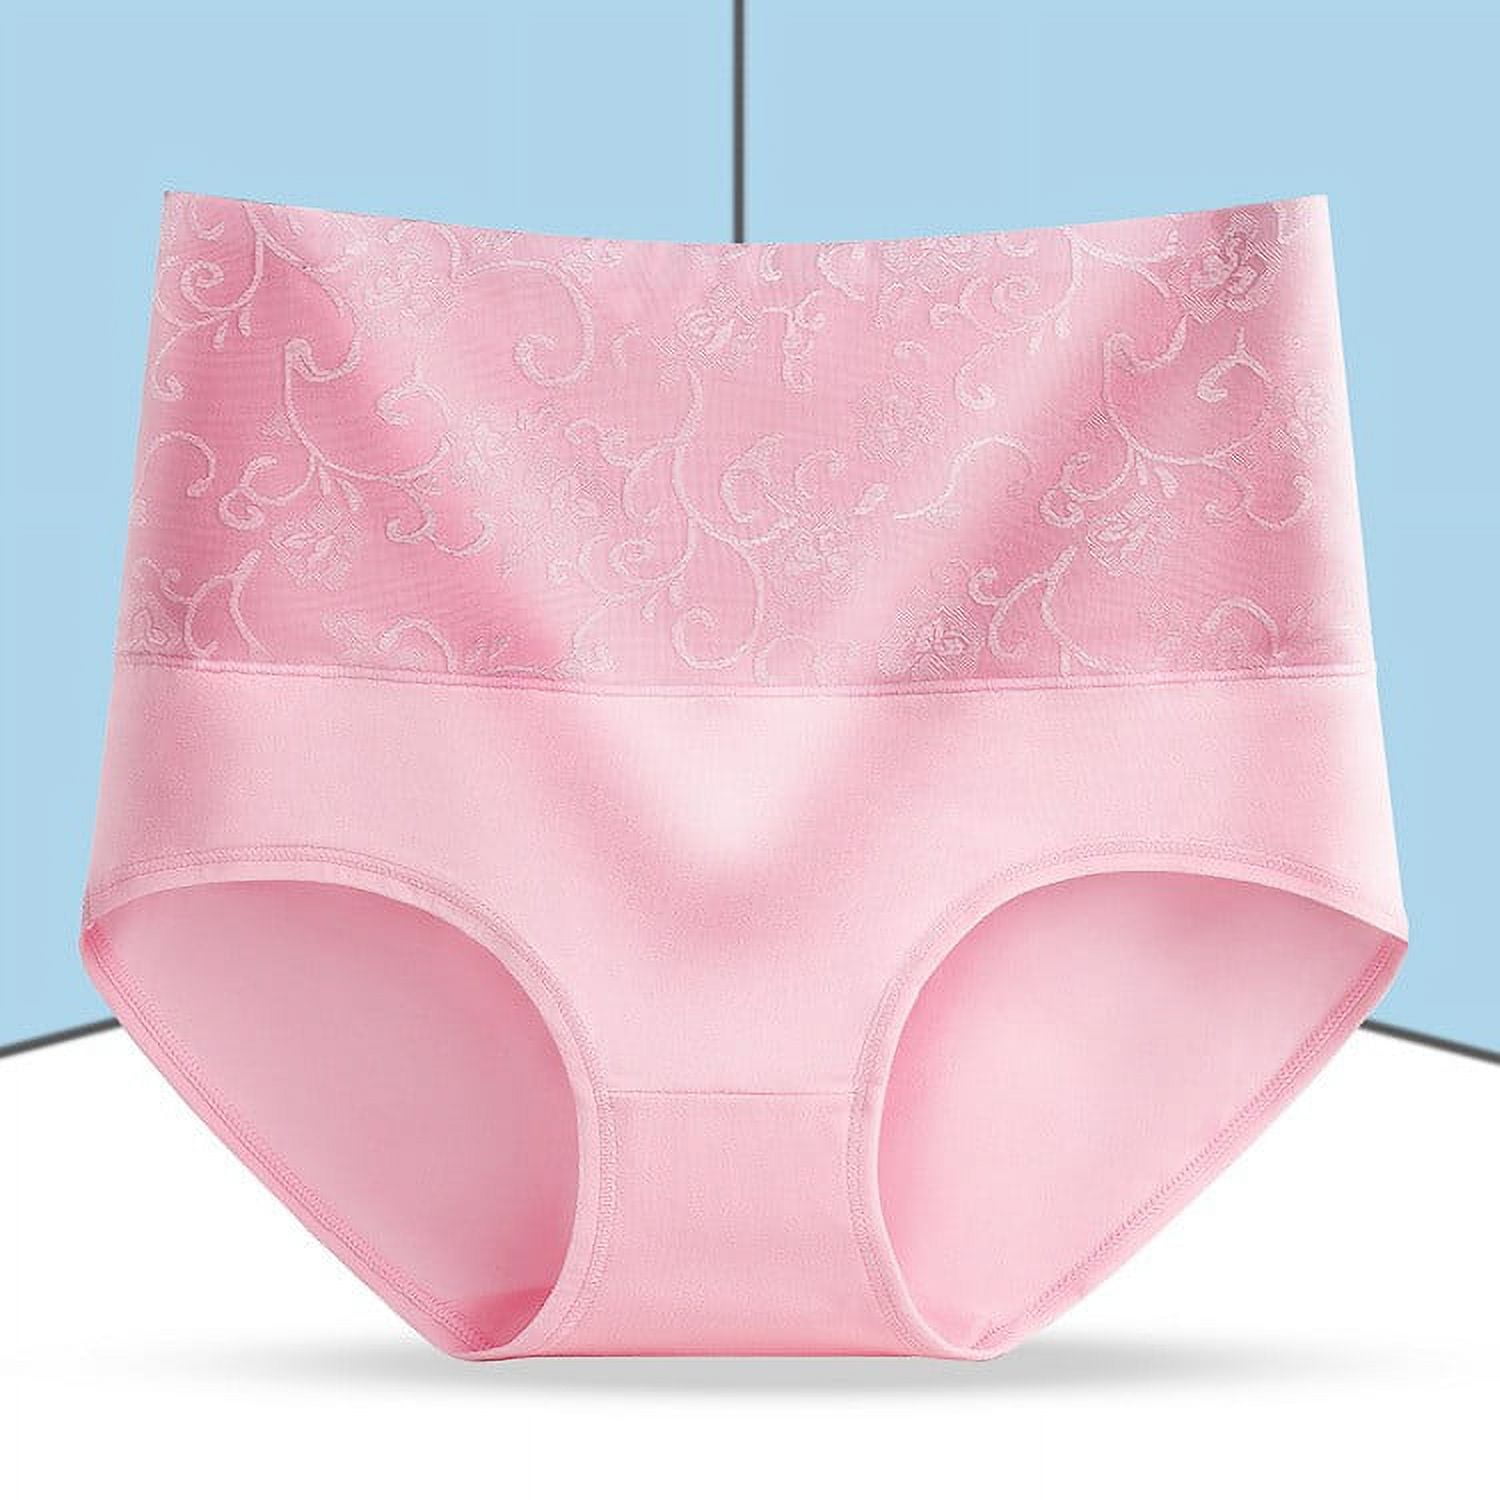 Sodopo Hanes Underwear For Women Cotton Half Wrapped Hip High